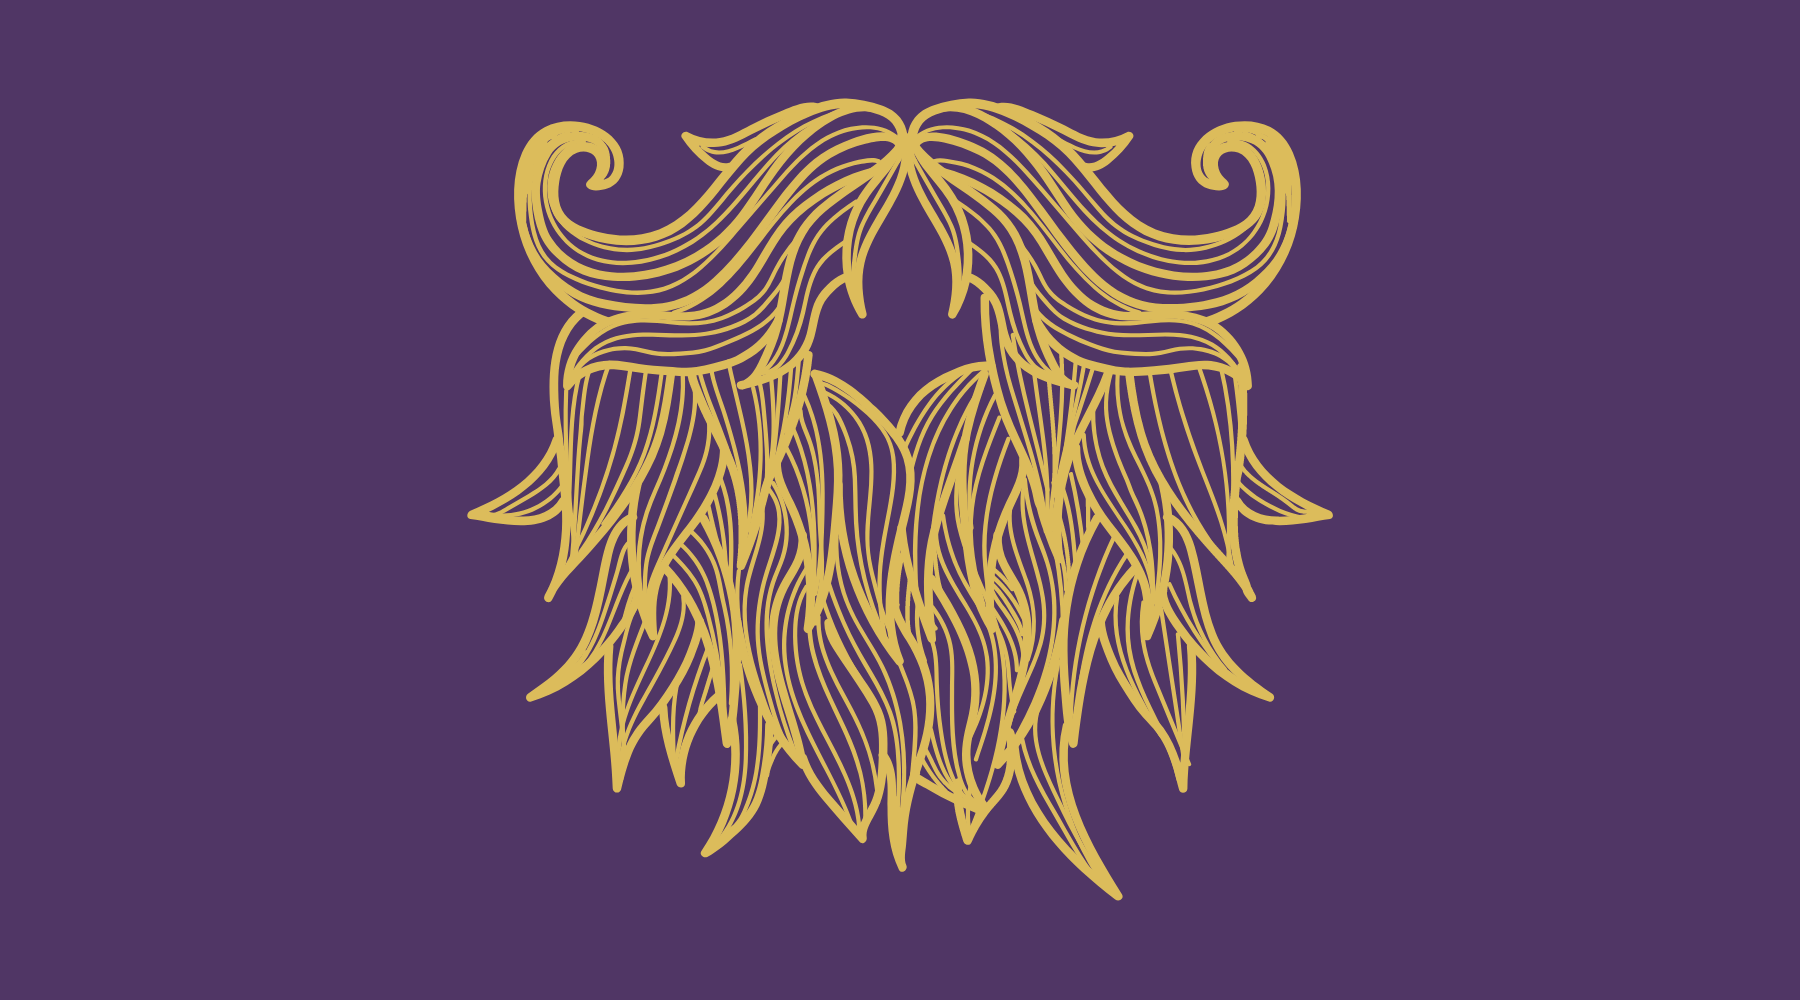 Beard & Moustache Championships: Category Details